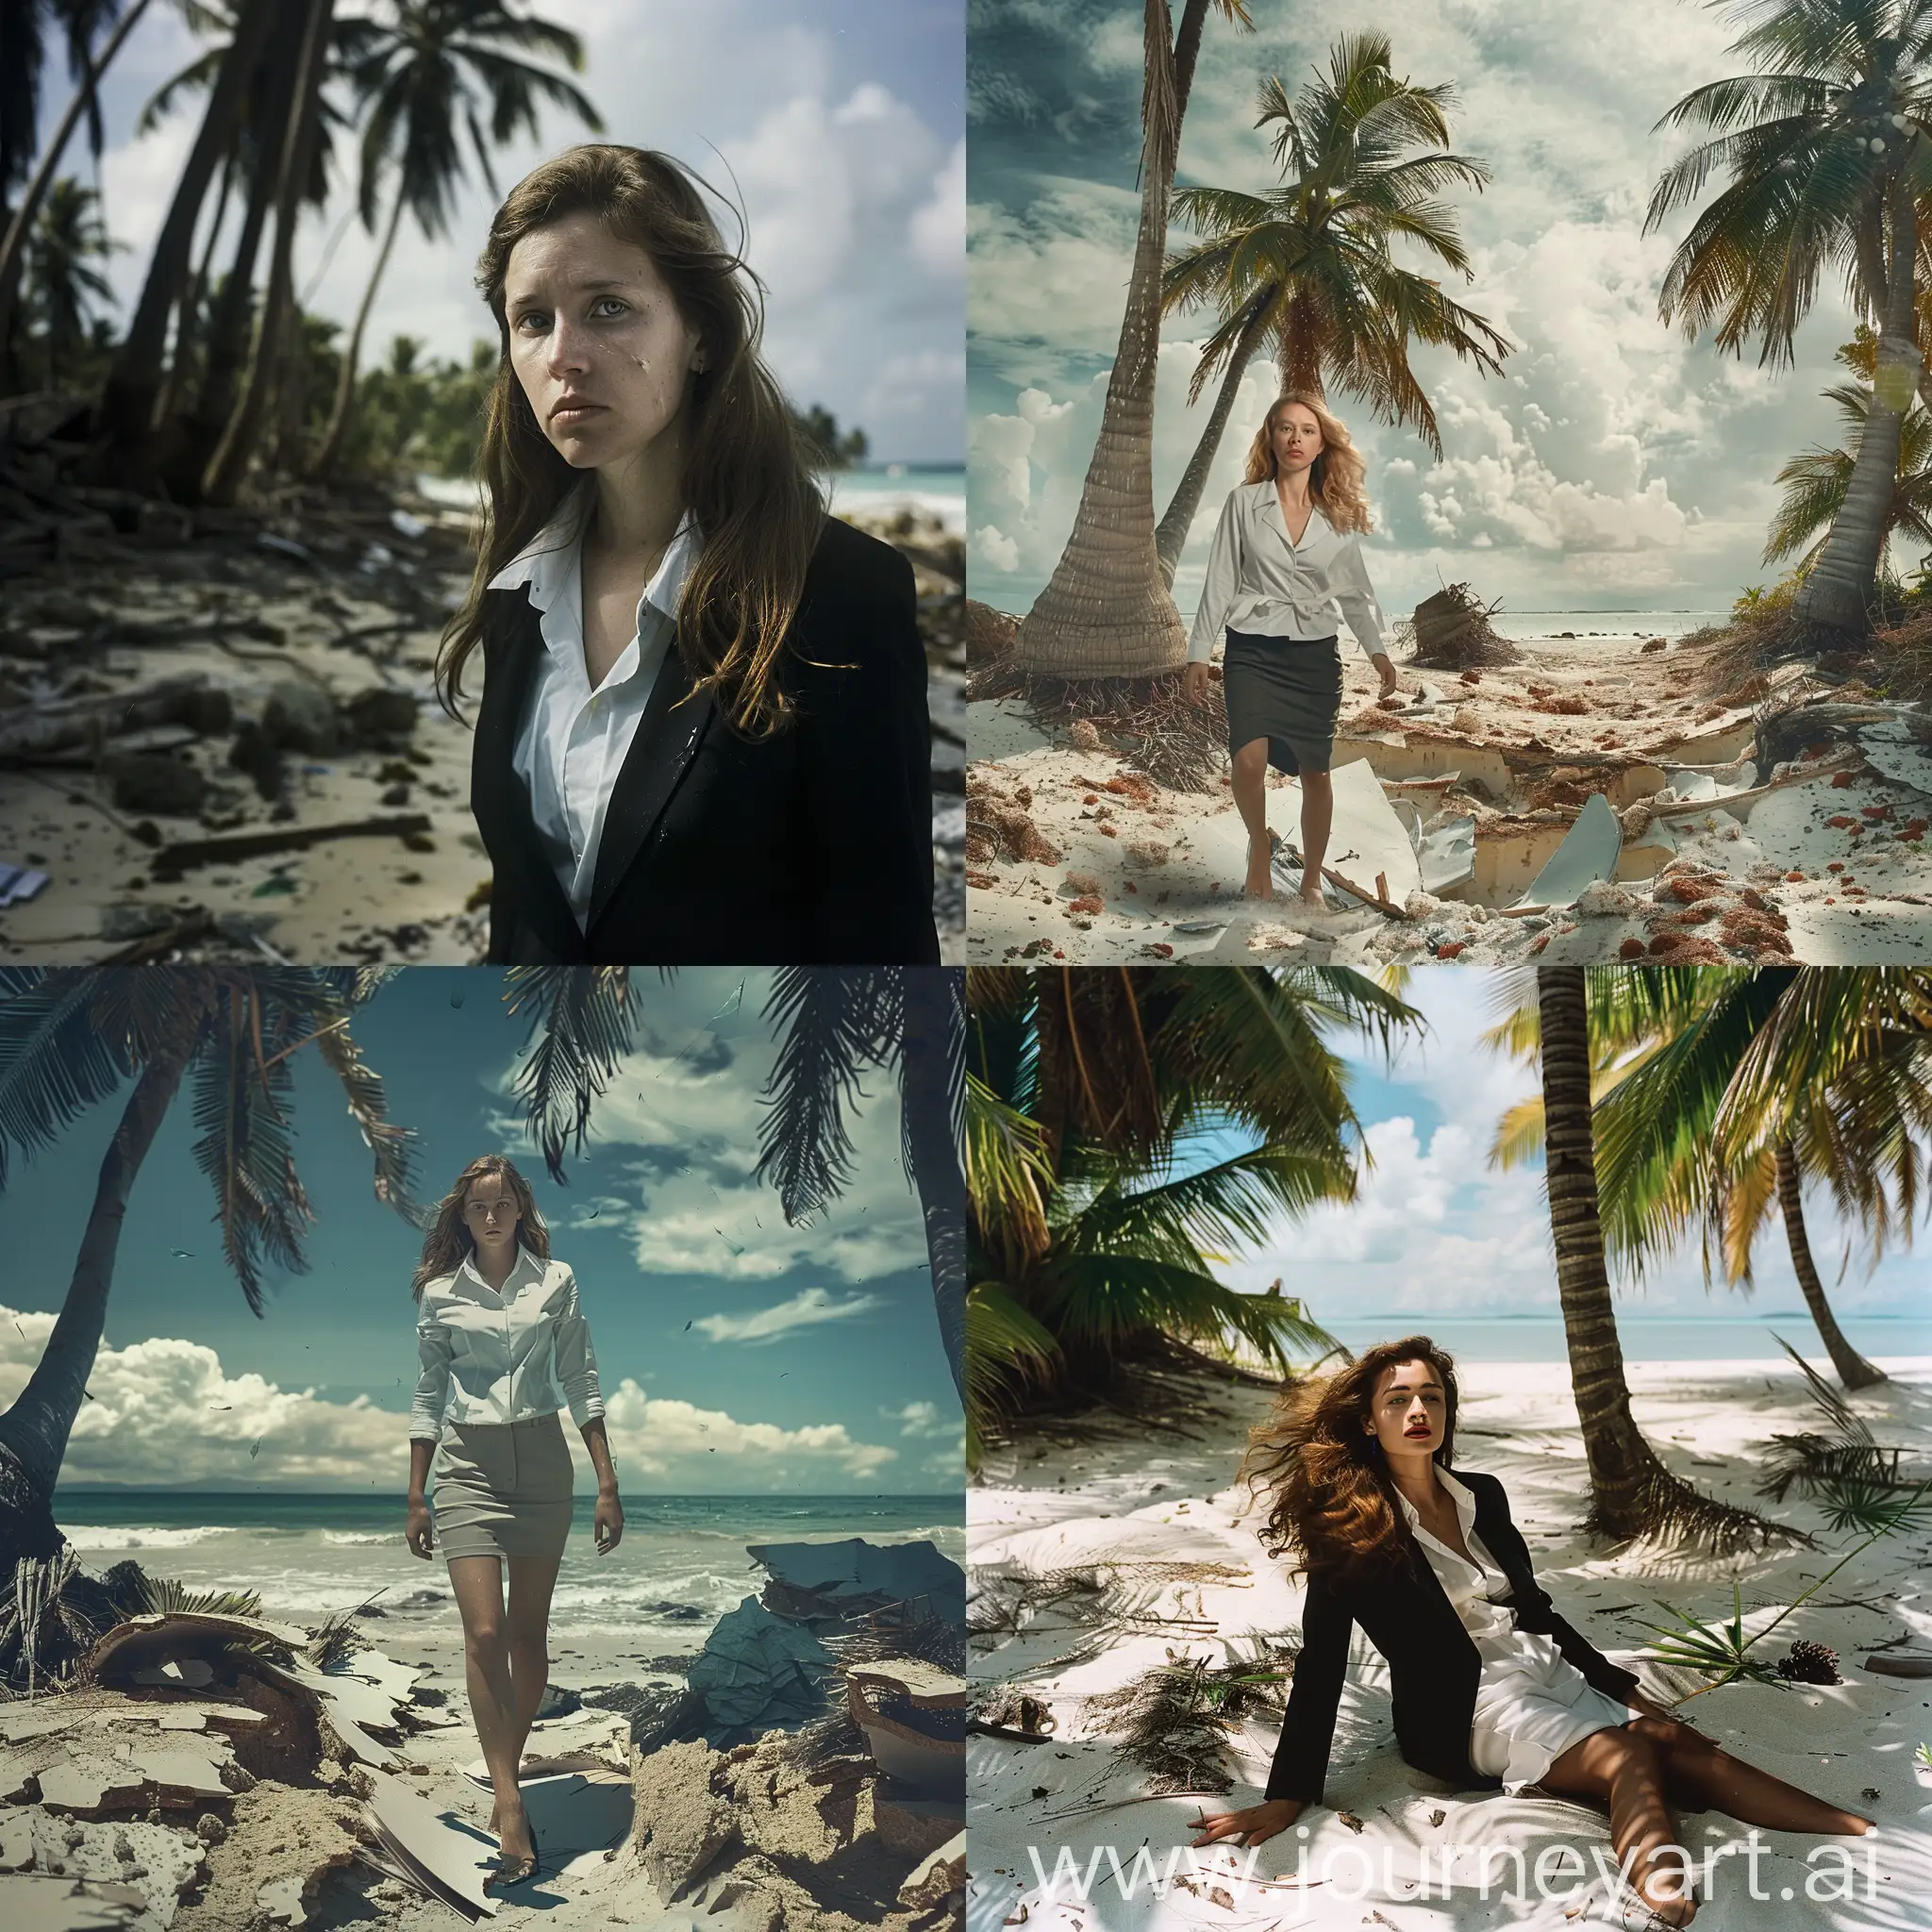 Survivor-Girl-in-Torn-Office-Attire-on-Deserted-Tropical-Island